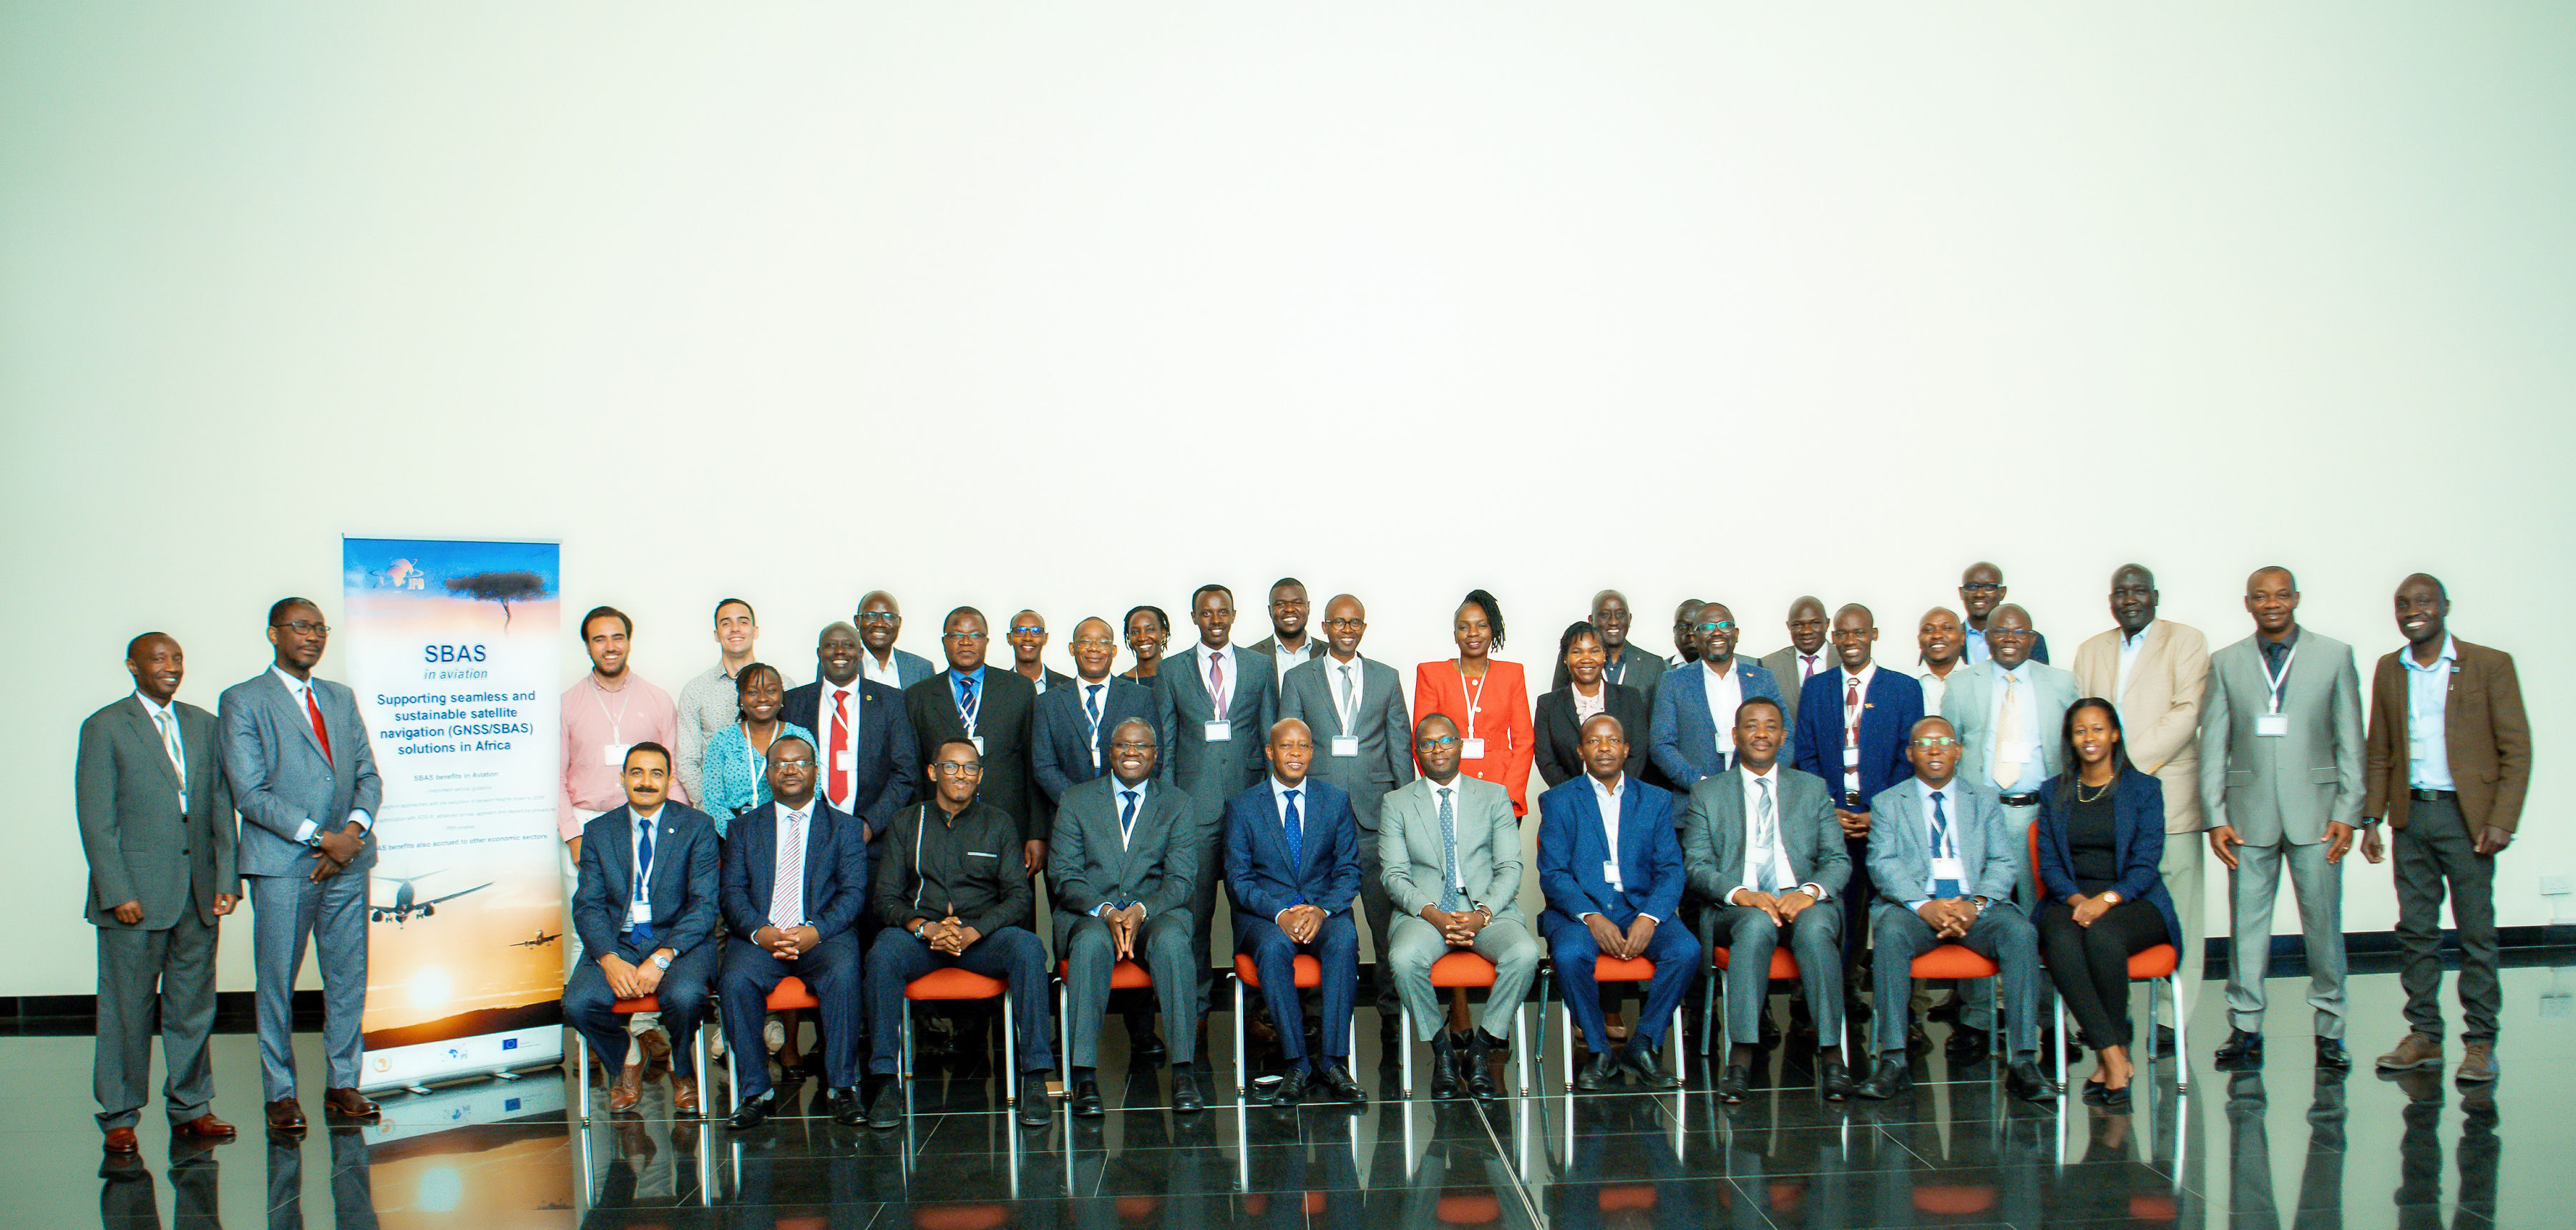 SatNav Africa JPO and Rwanda Civil Aviation Authority organise the Regional Outreach on SBAS implementation and use in Aviation in Africa, Kigali, Rwanda (5th – 7th July 2022)